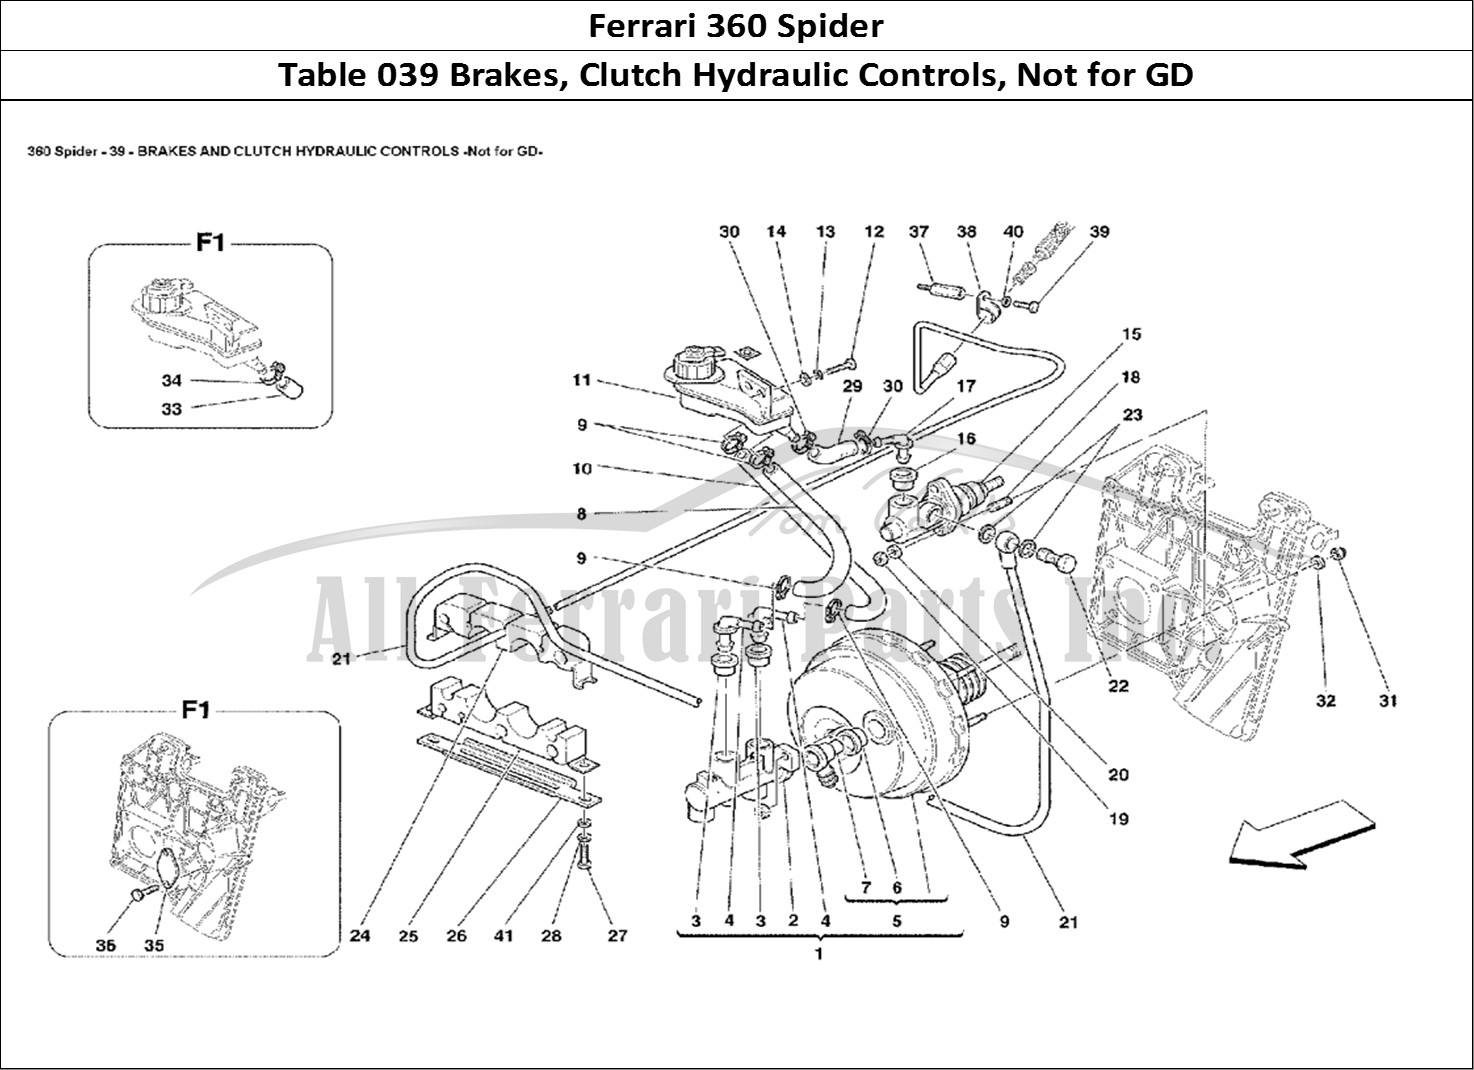 Ferrari Parts Ferrari 360 Spider Page 039 Brakes and Clutch Hydraul